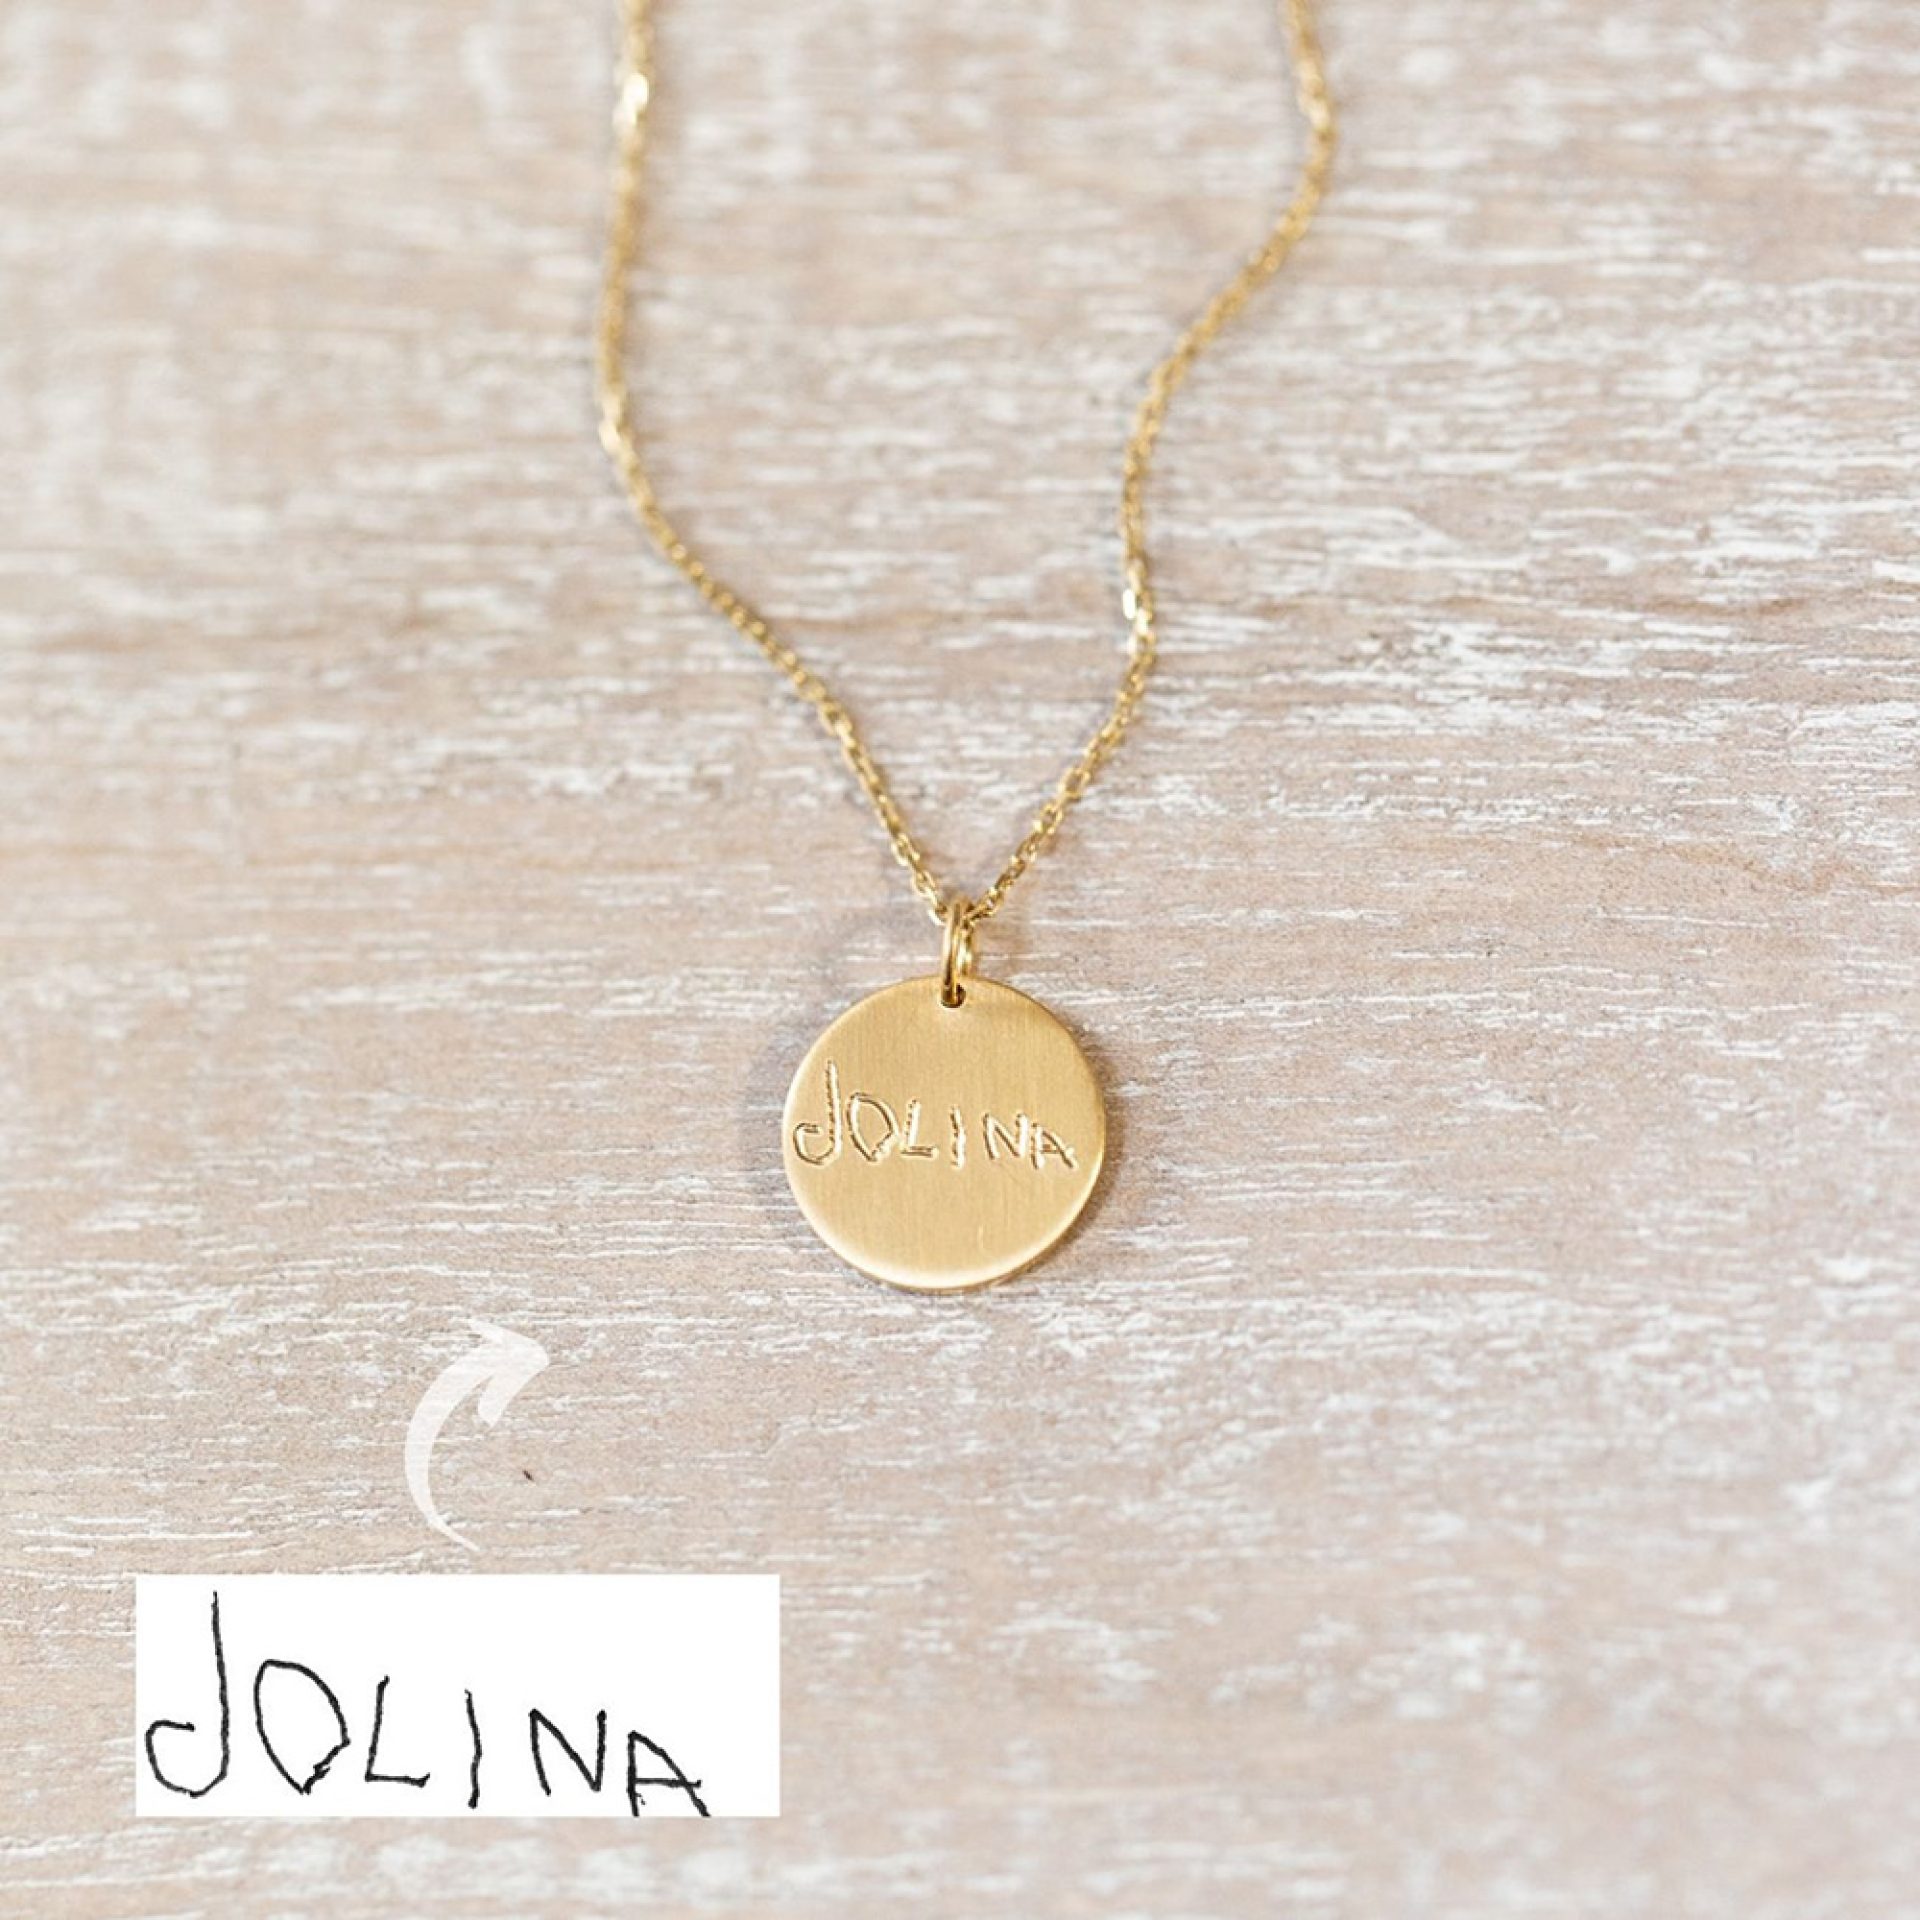 Halskette-Jooni-Gravur-Kinderhandschrift-Namensgravur-personalisiert-Silber-Gold